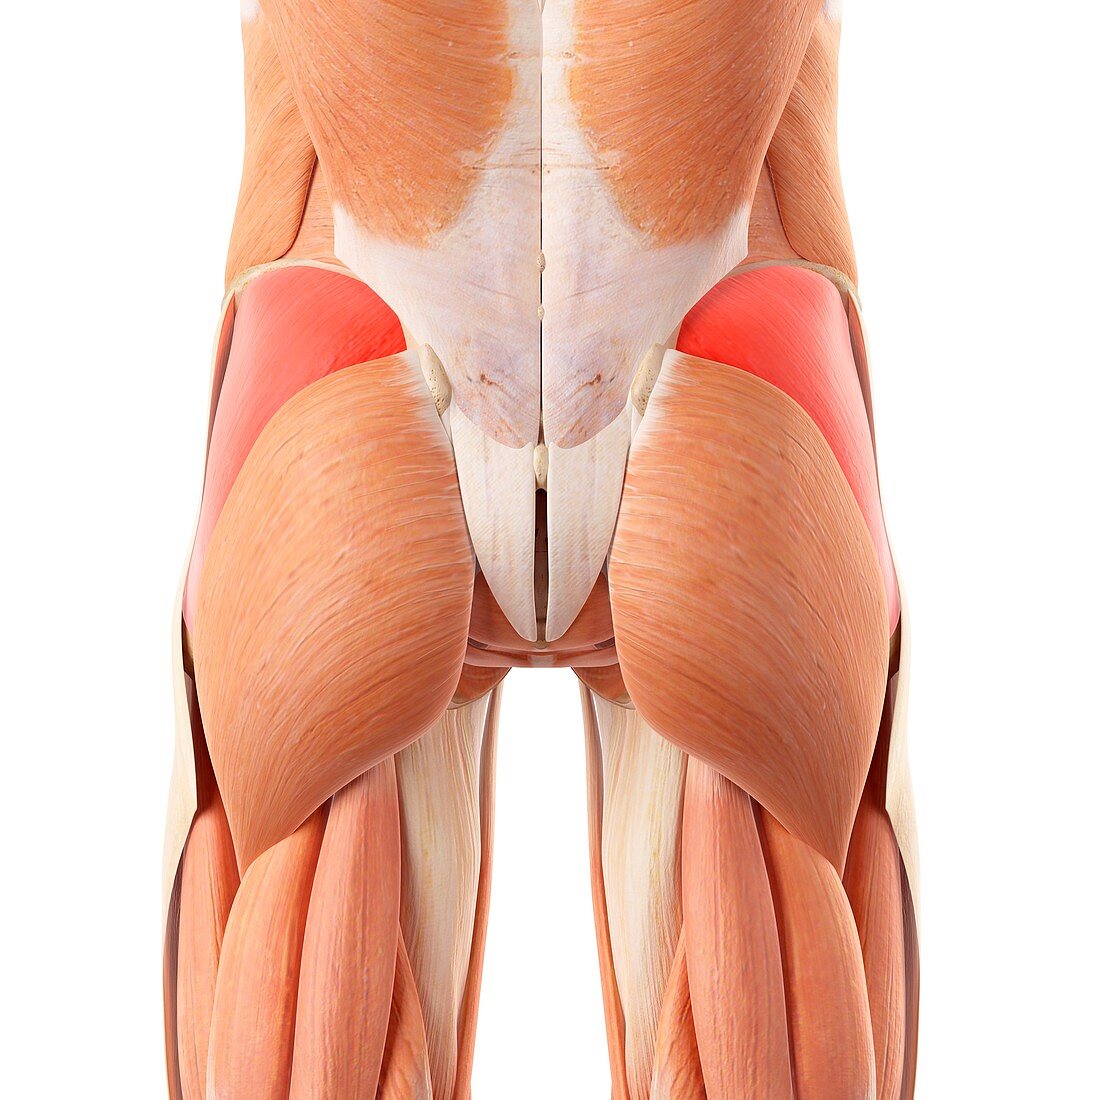 Human buttock muscles